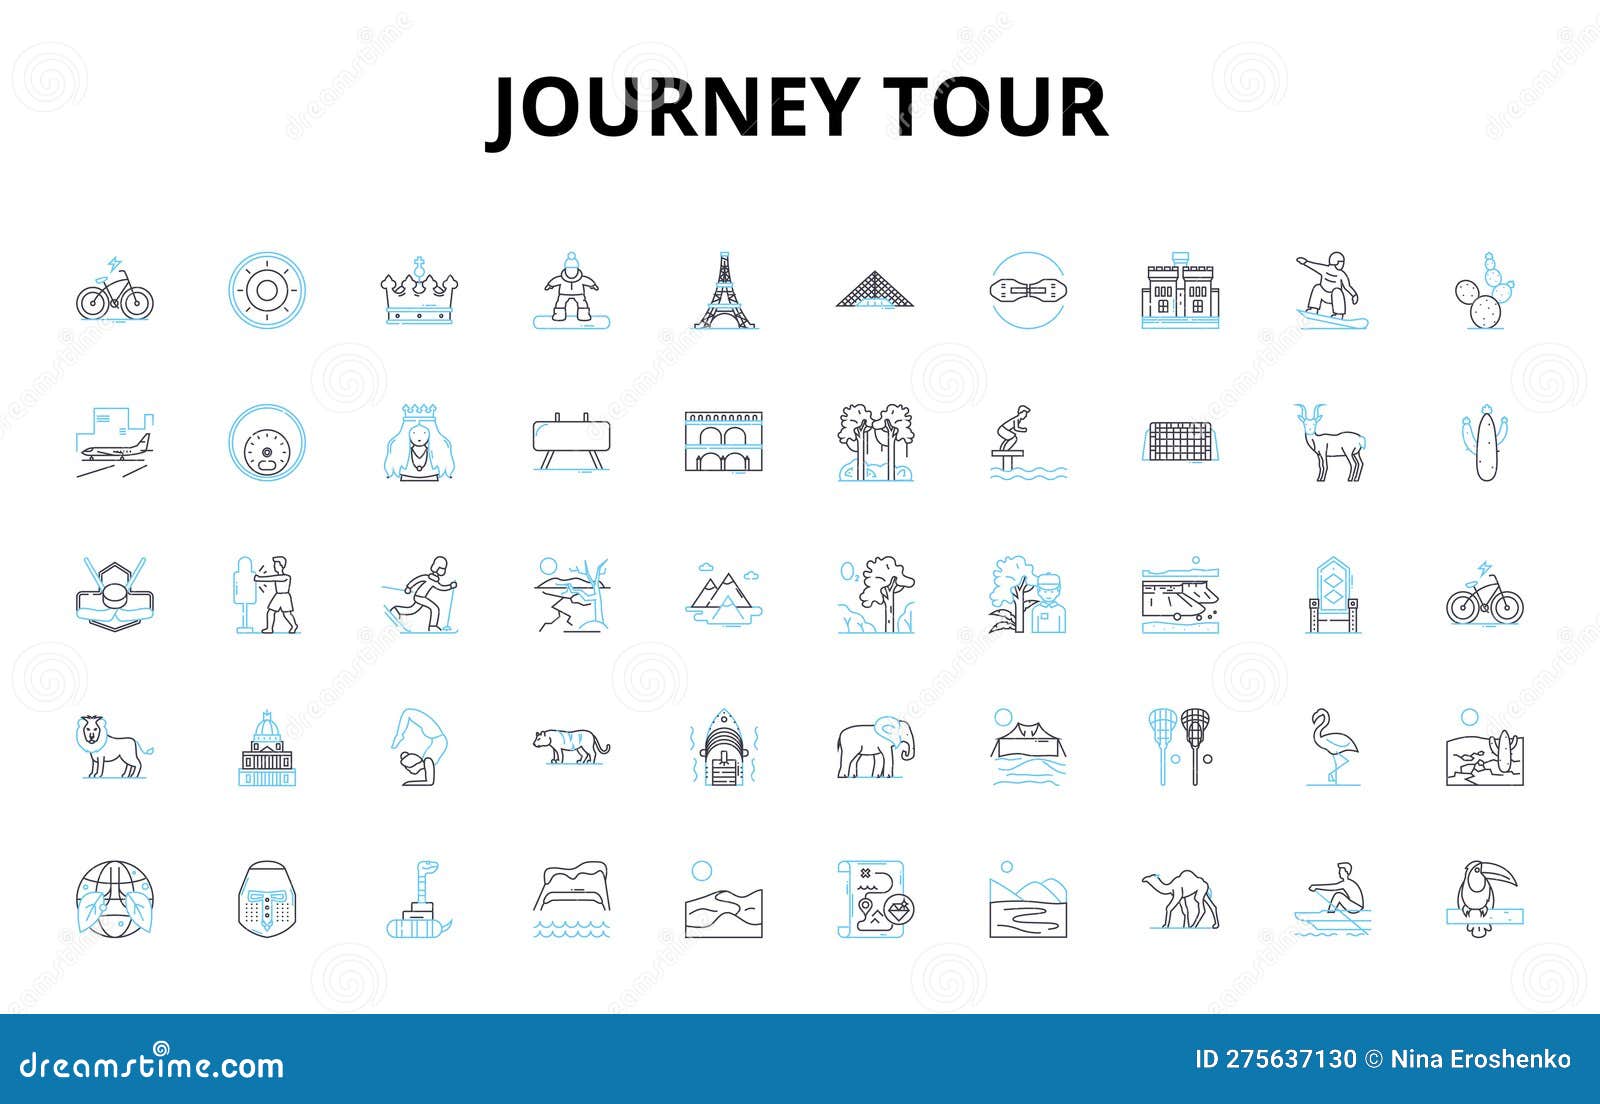 journey tour linear icons set. trek, adventure, expedition, excursion, odyssey, safari, jaunt  s and line